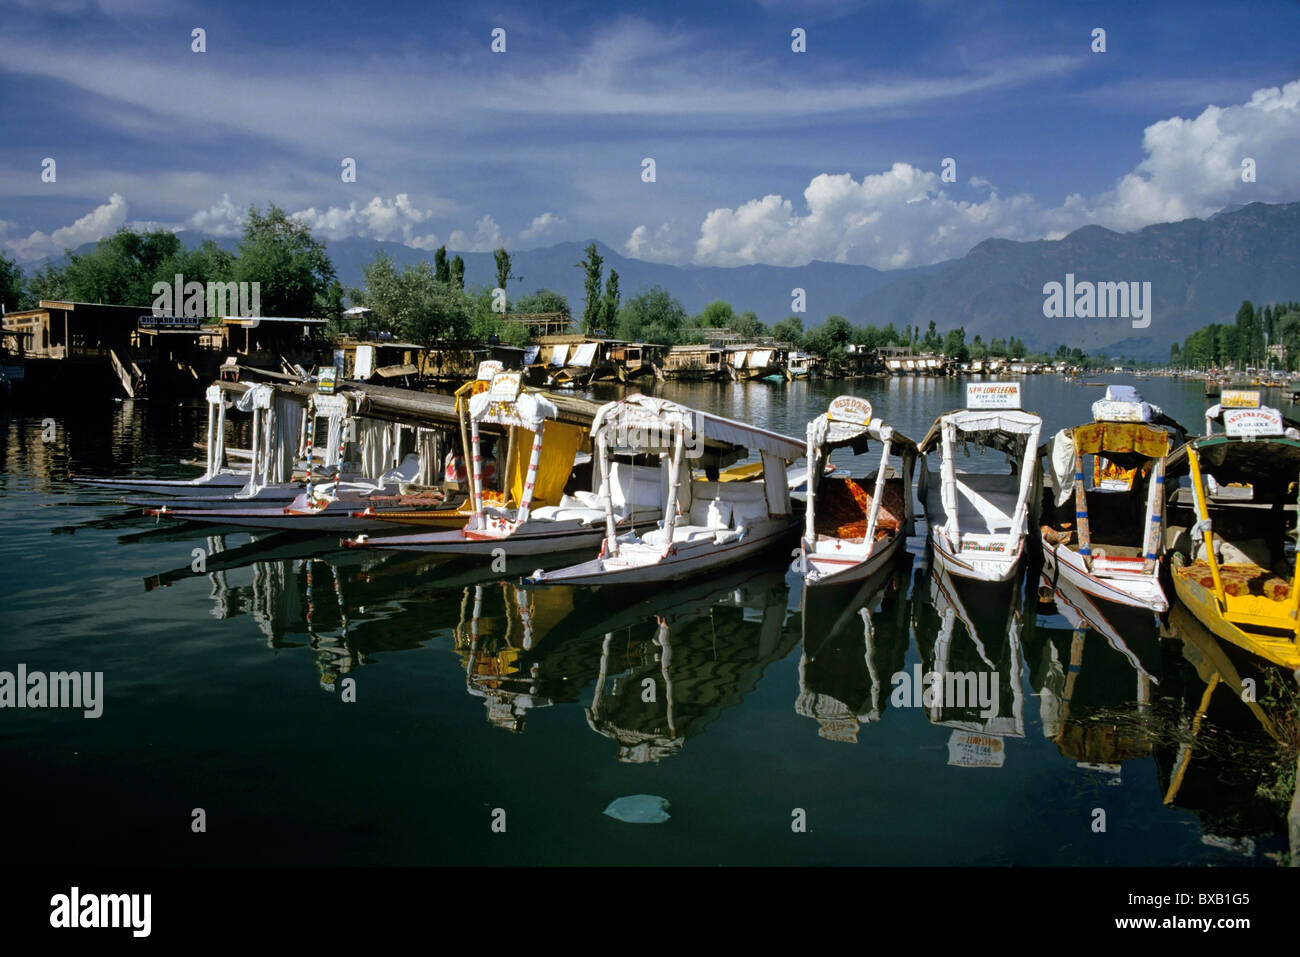 Rows of shikara - traditional wooden tourist boats - on Dal Lake, Srinagar, Kashmir, India. Stock Photo